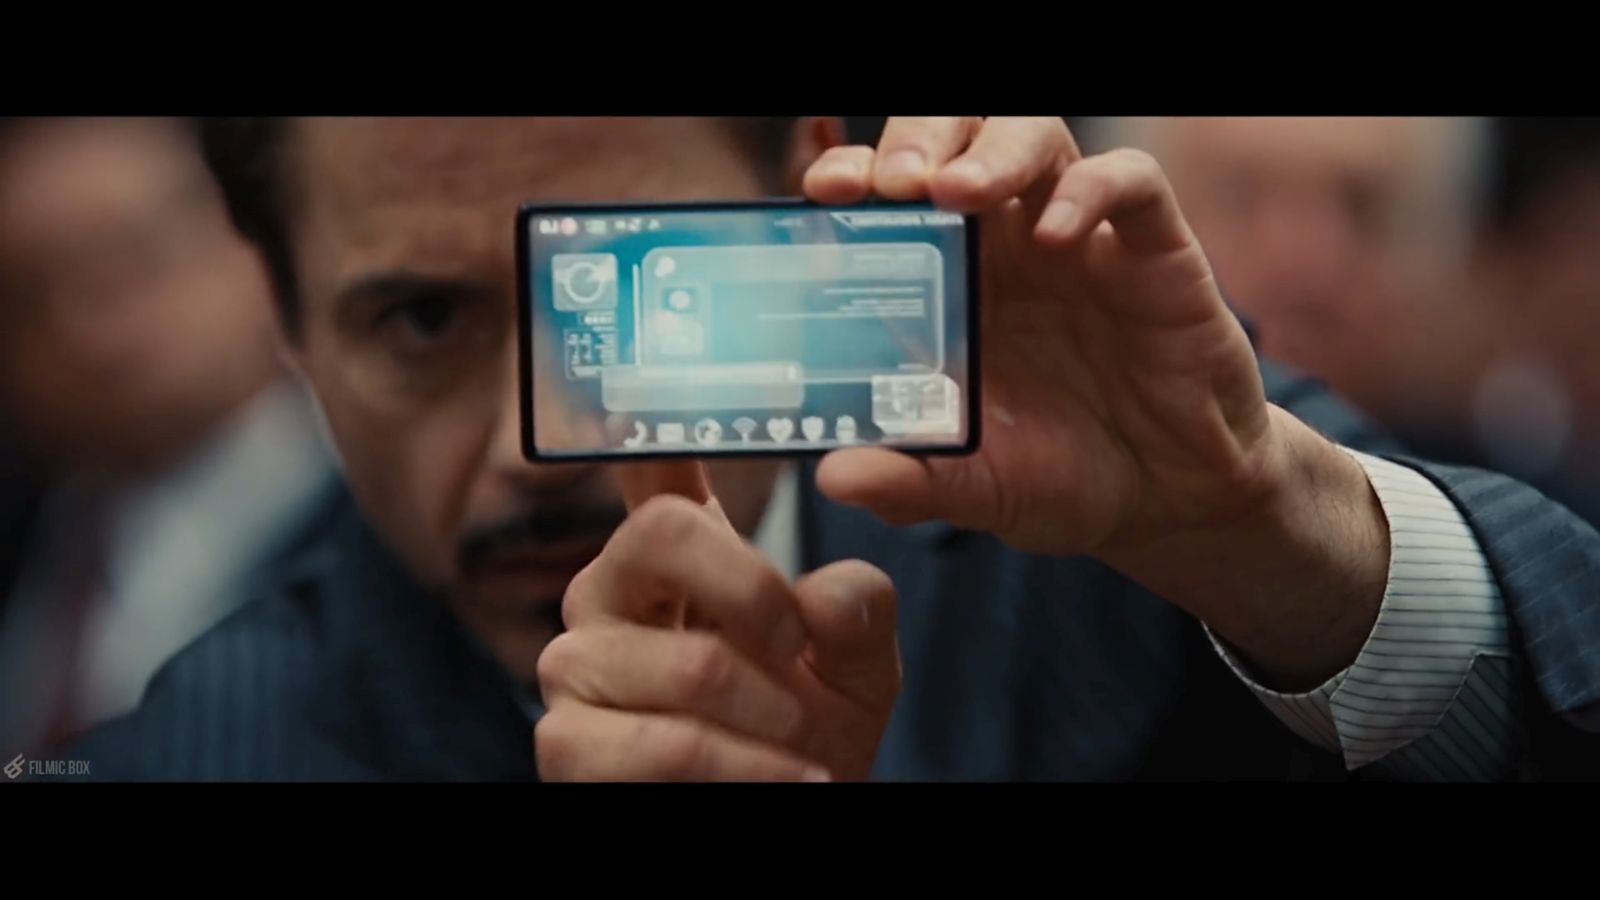 Iron Man 2 (2010) – unknown transparent LG phone